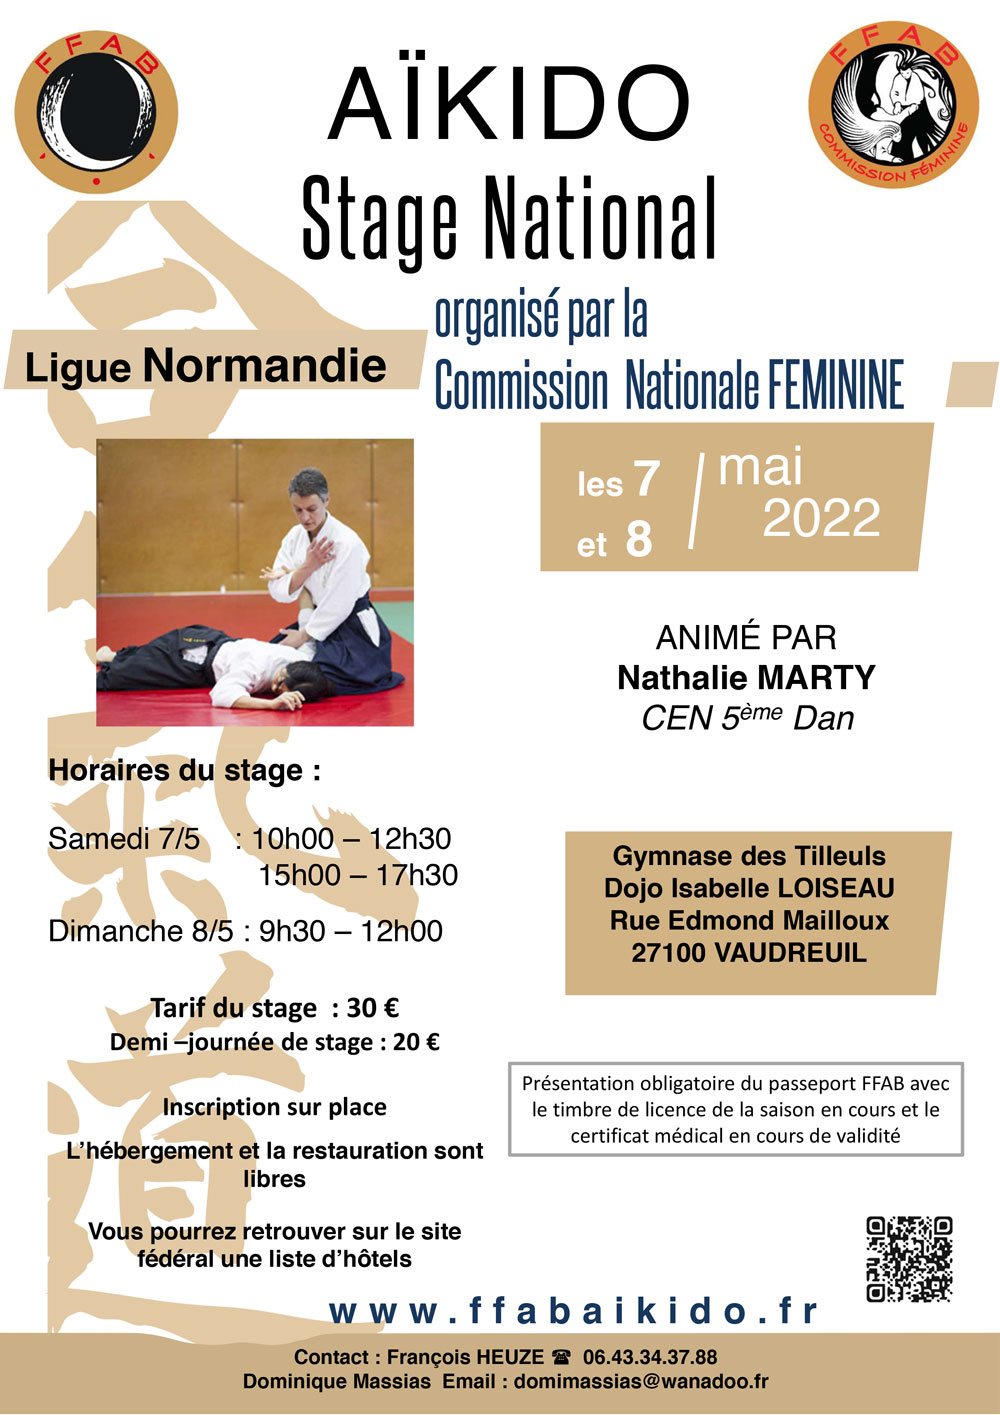 Aikido-Club-Evreux-Stage-commission-feminine-mai-2022